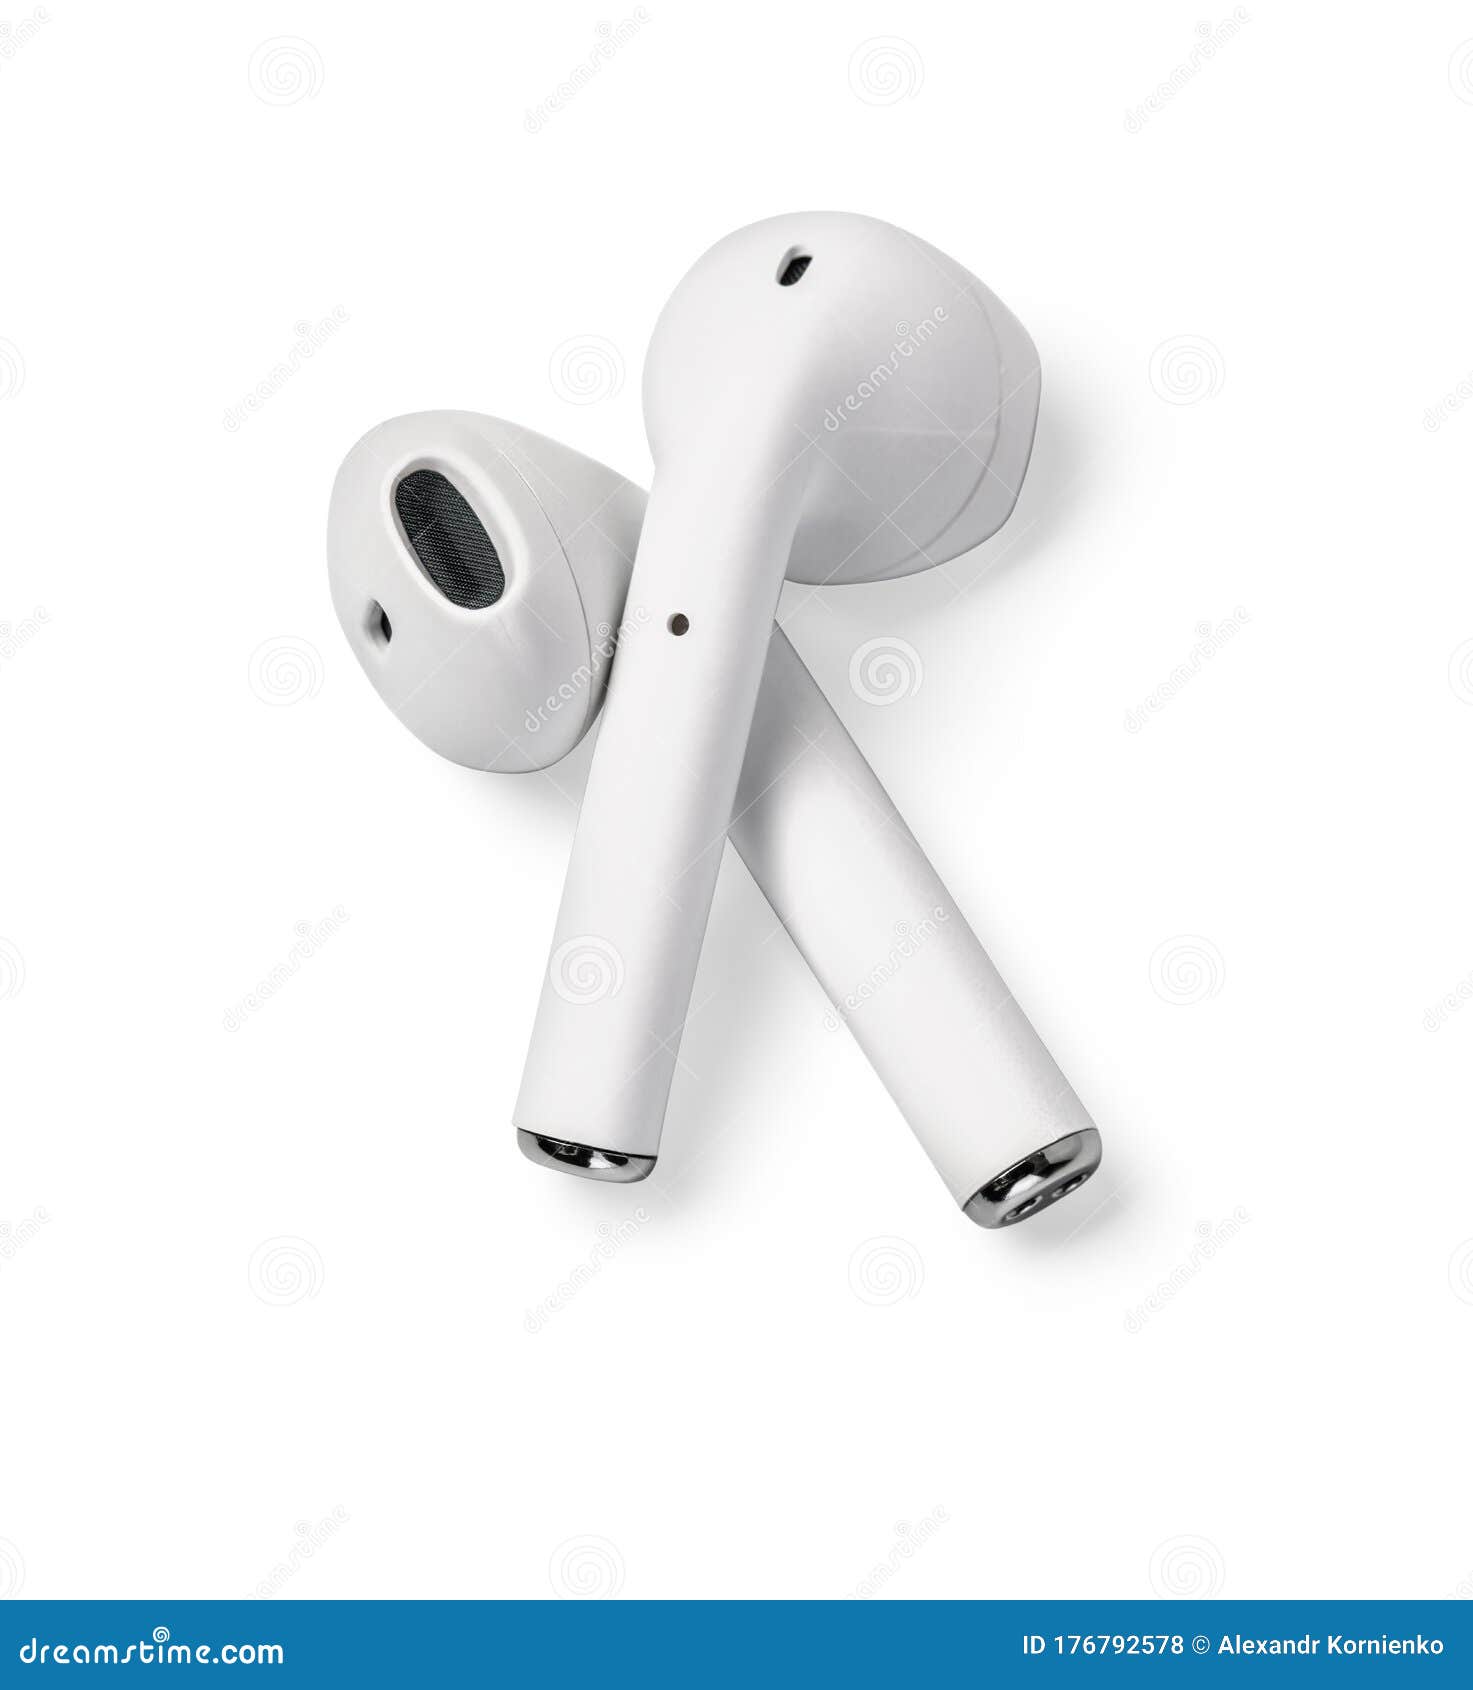 white headphones wireless earphones